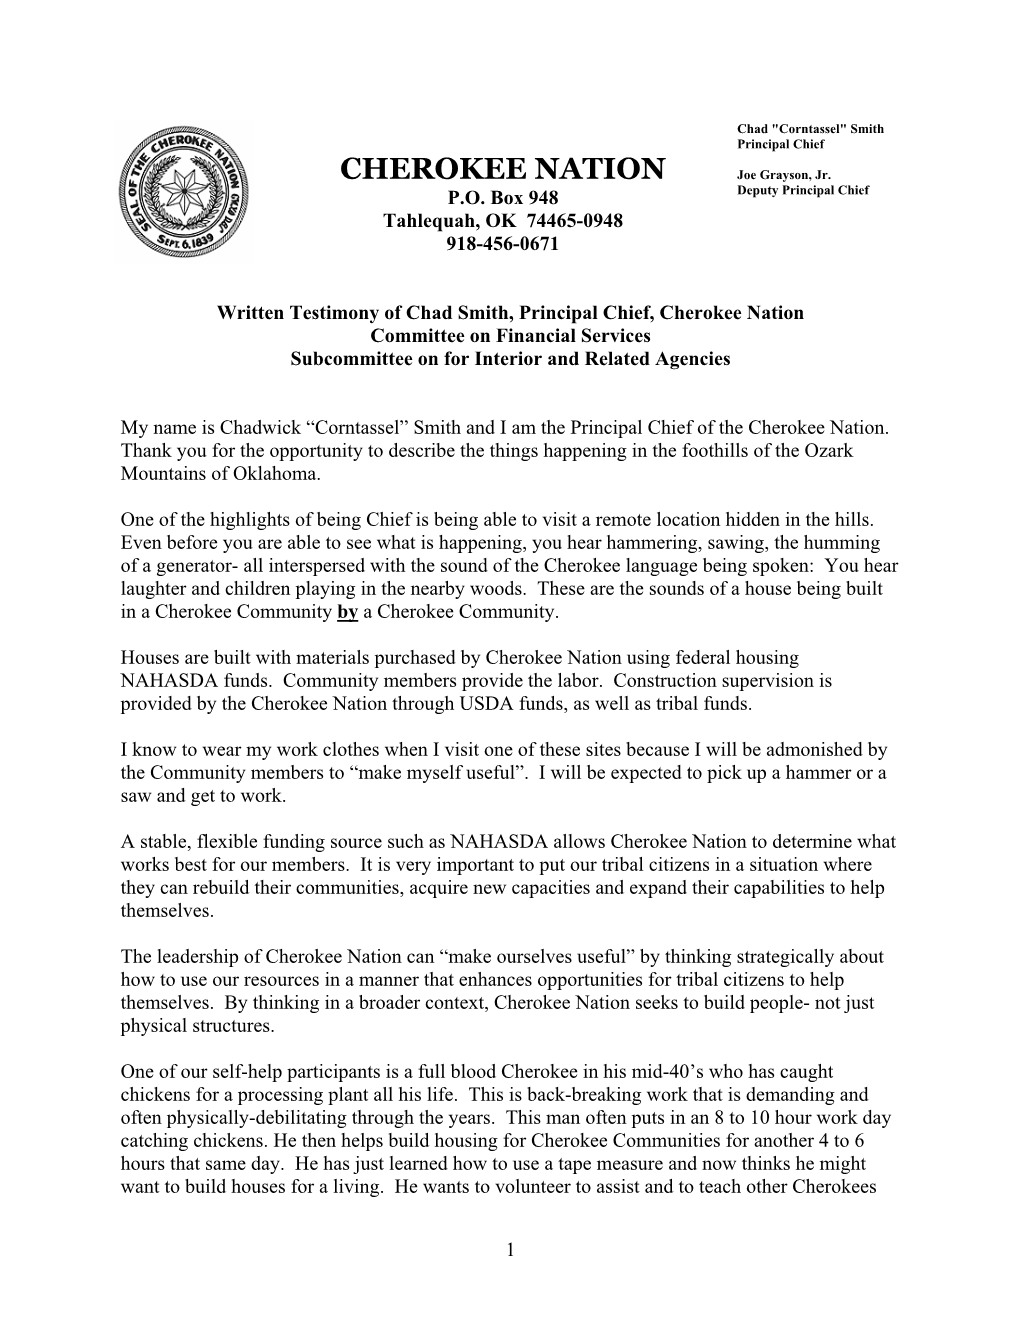 Chief Chadwick Smith, Principal Chief, Cherokee Nation of Oklahoma